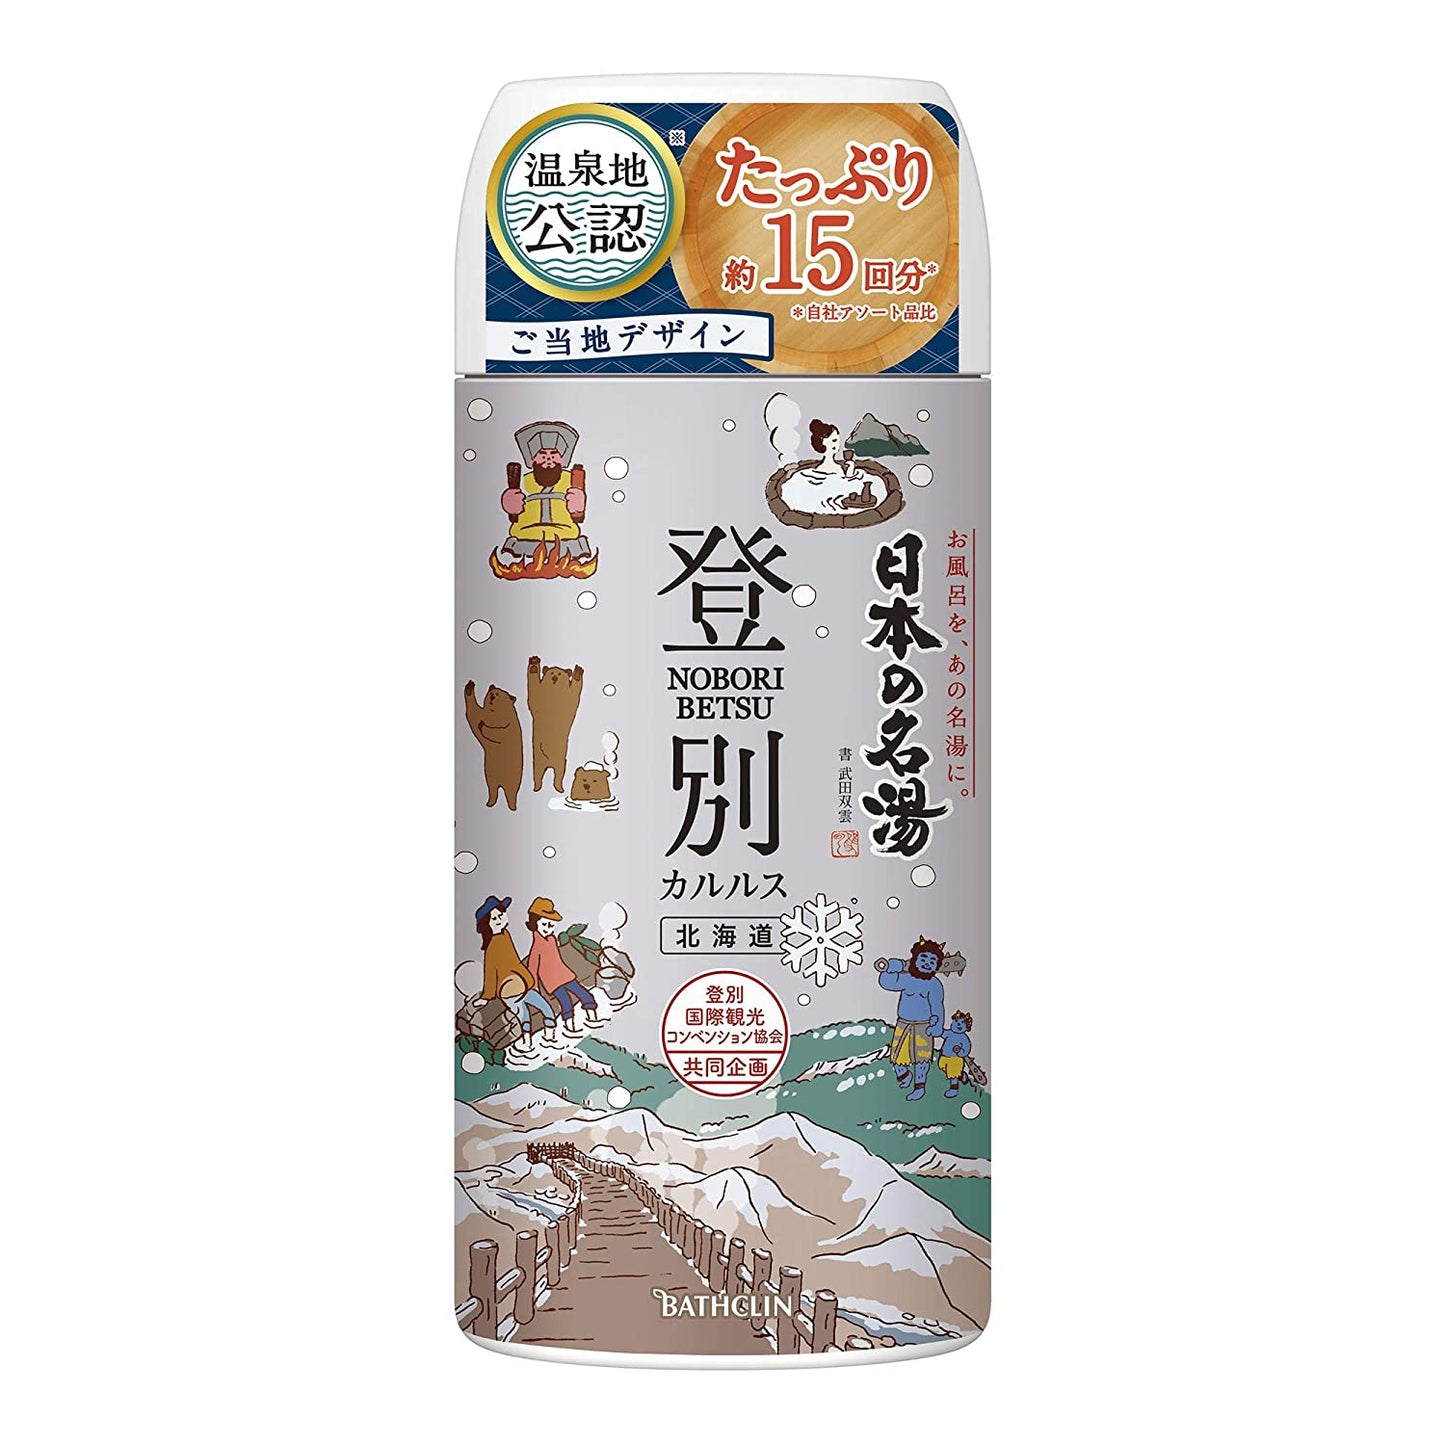 BATHCLIN Bath Salt 450g - Japanese Hot Spring Bath Salt